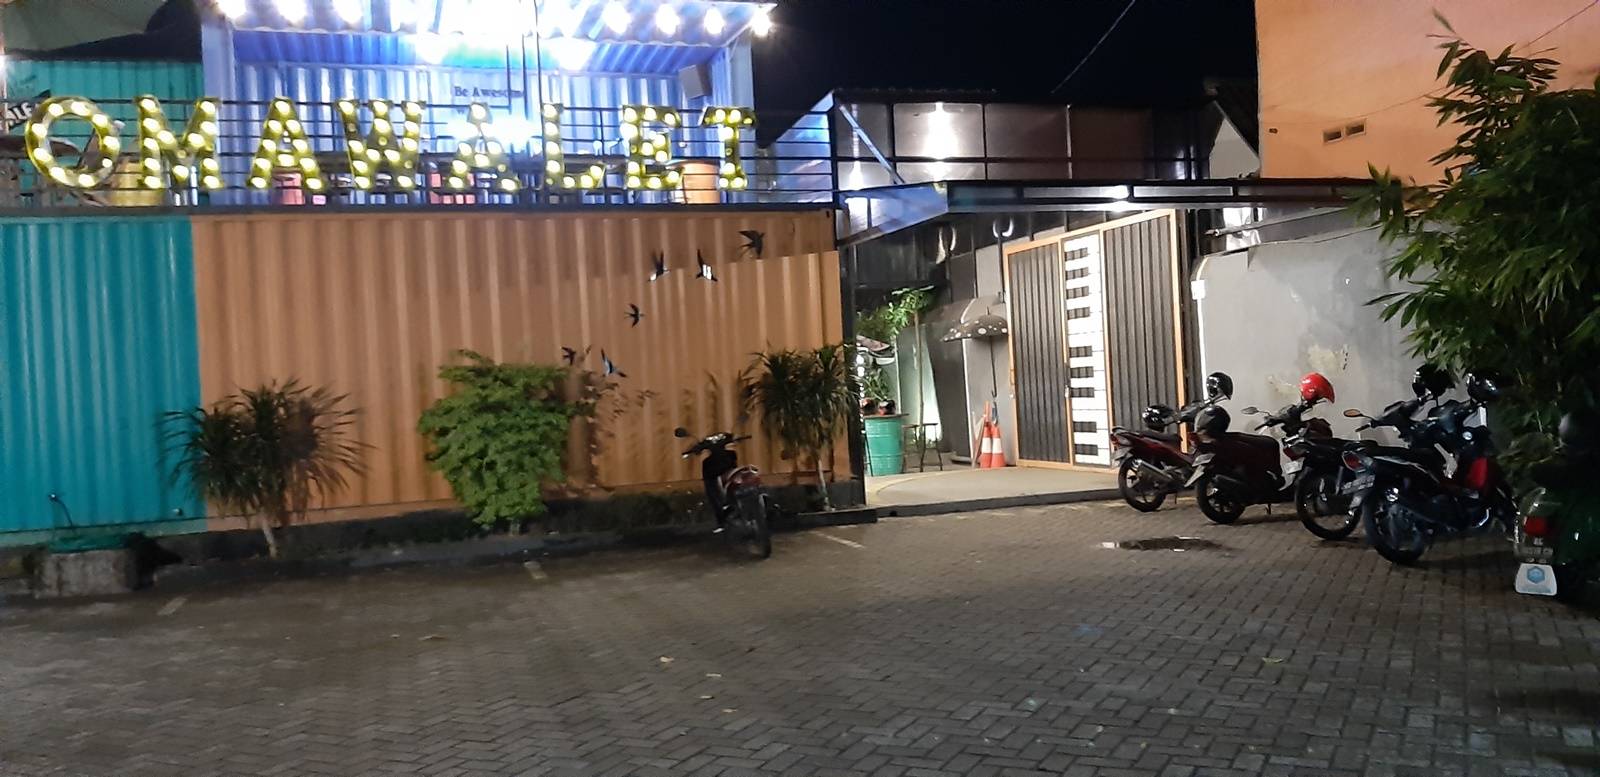 Area Parkir yang Luas (c) Mei Indriani/Travelingyuk